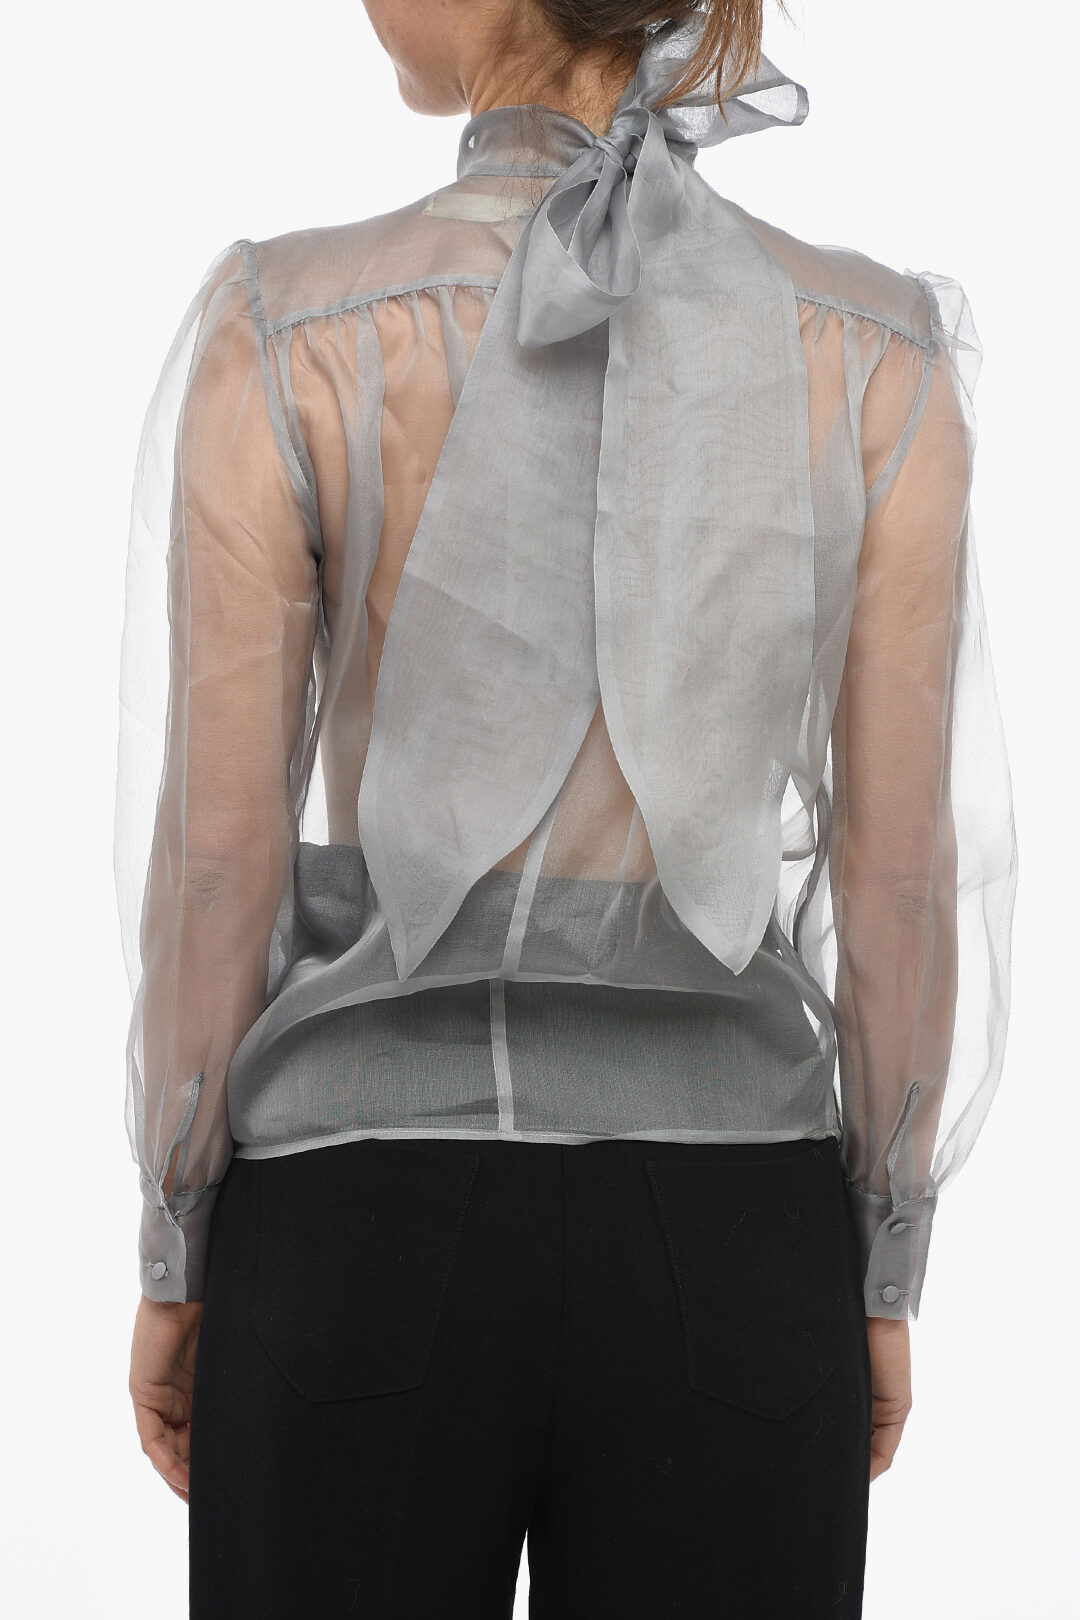 https://data.glamood.com/imgprodotto/long-sleeved-sheer-blouse-with-ribbon-collar_1439345_zoom.jpg